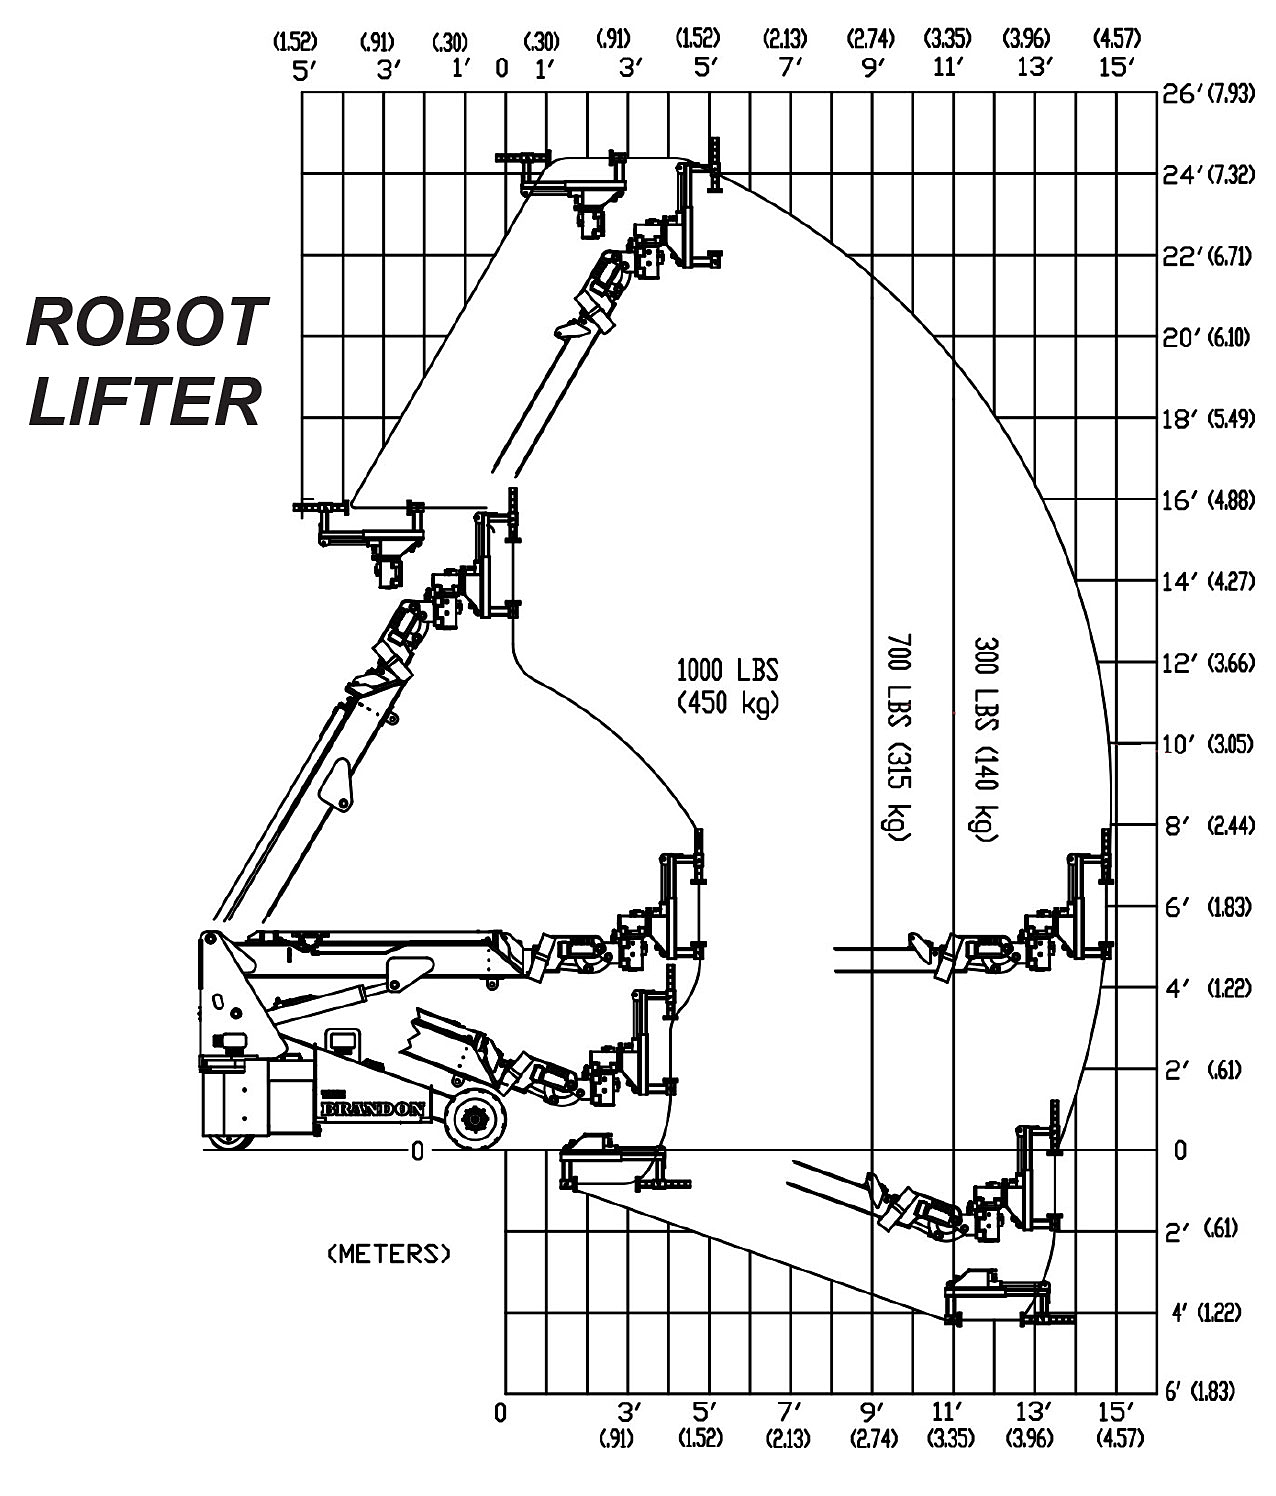 The Brandon 6E Robot Lifter Load Capacity